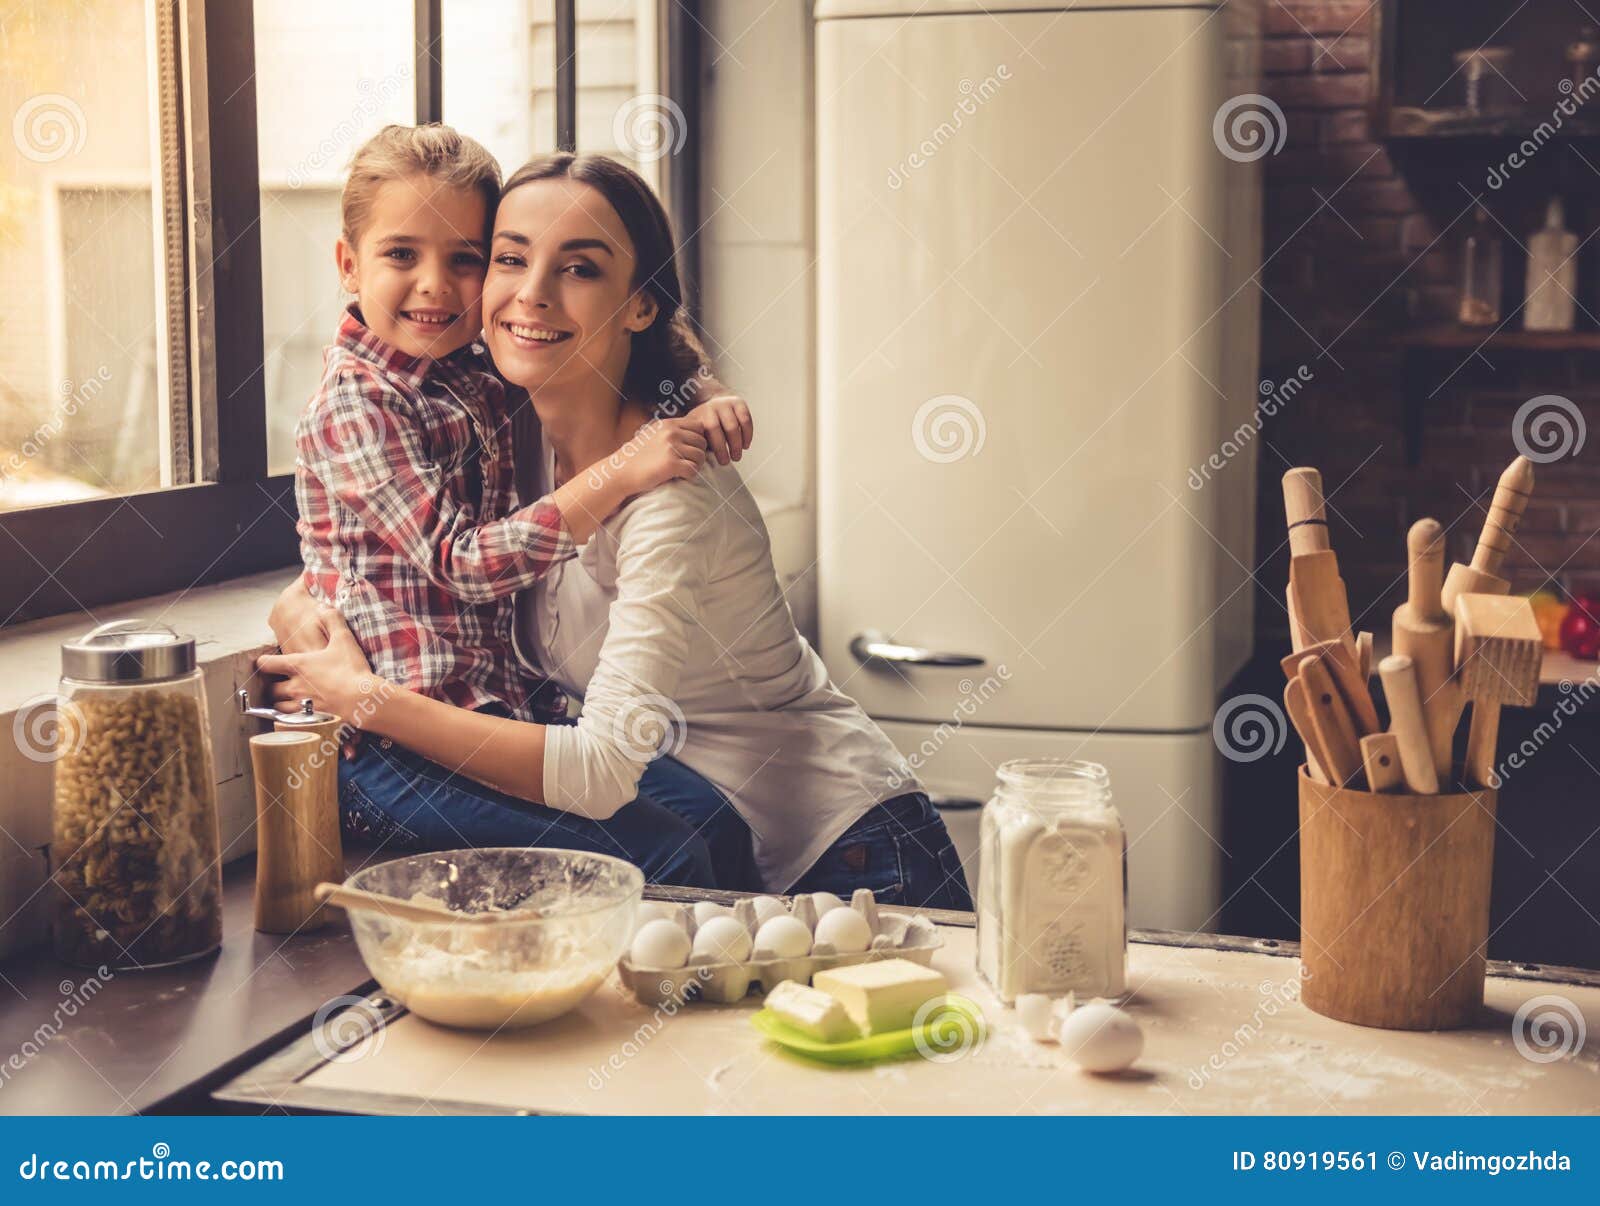 Мама с дочкой на кухне. Фотосессия мама и дочка на кухне. Фотосессия на кухне мама и дочь. Фотопроект мама с дочкой на кухне. Фотосет мама с дочкой на кухне.